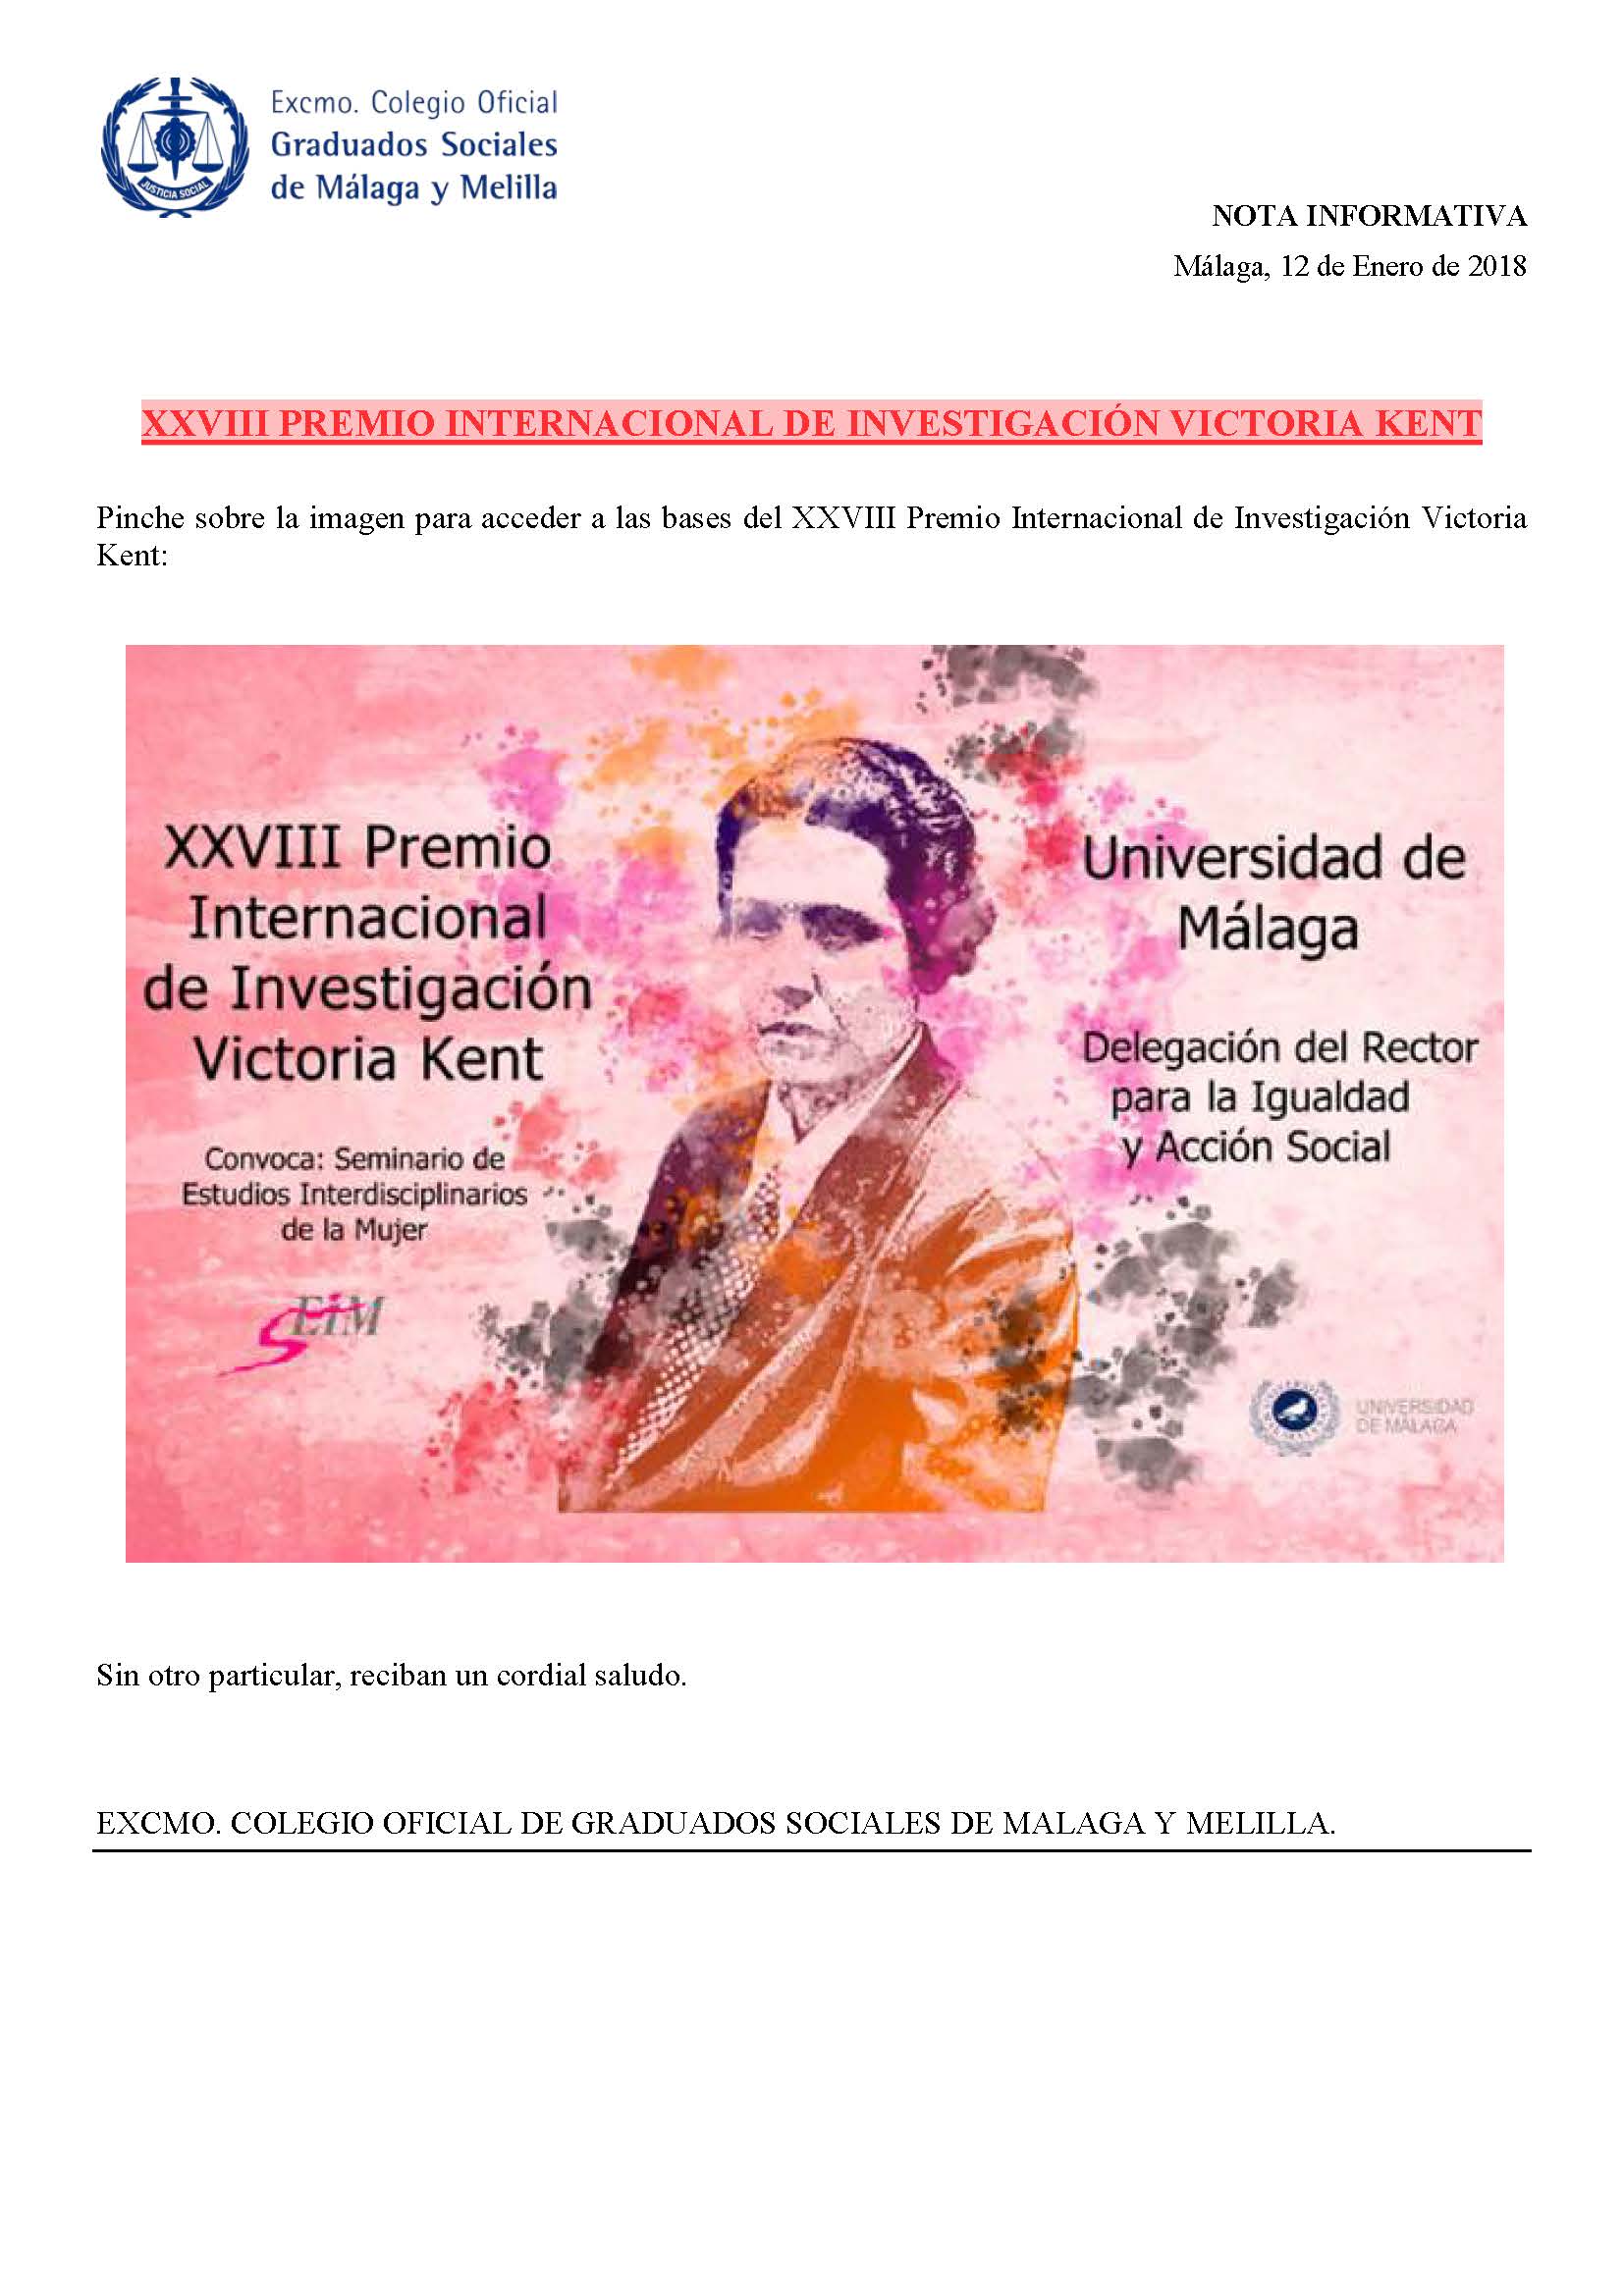 NOTA INFORMATIVA XXVIII PREMIO INTERNACIONAL DE INVESTIGACION VICTORIA KENT